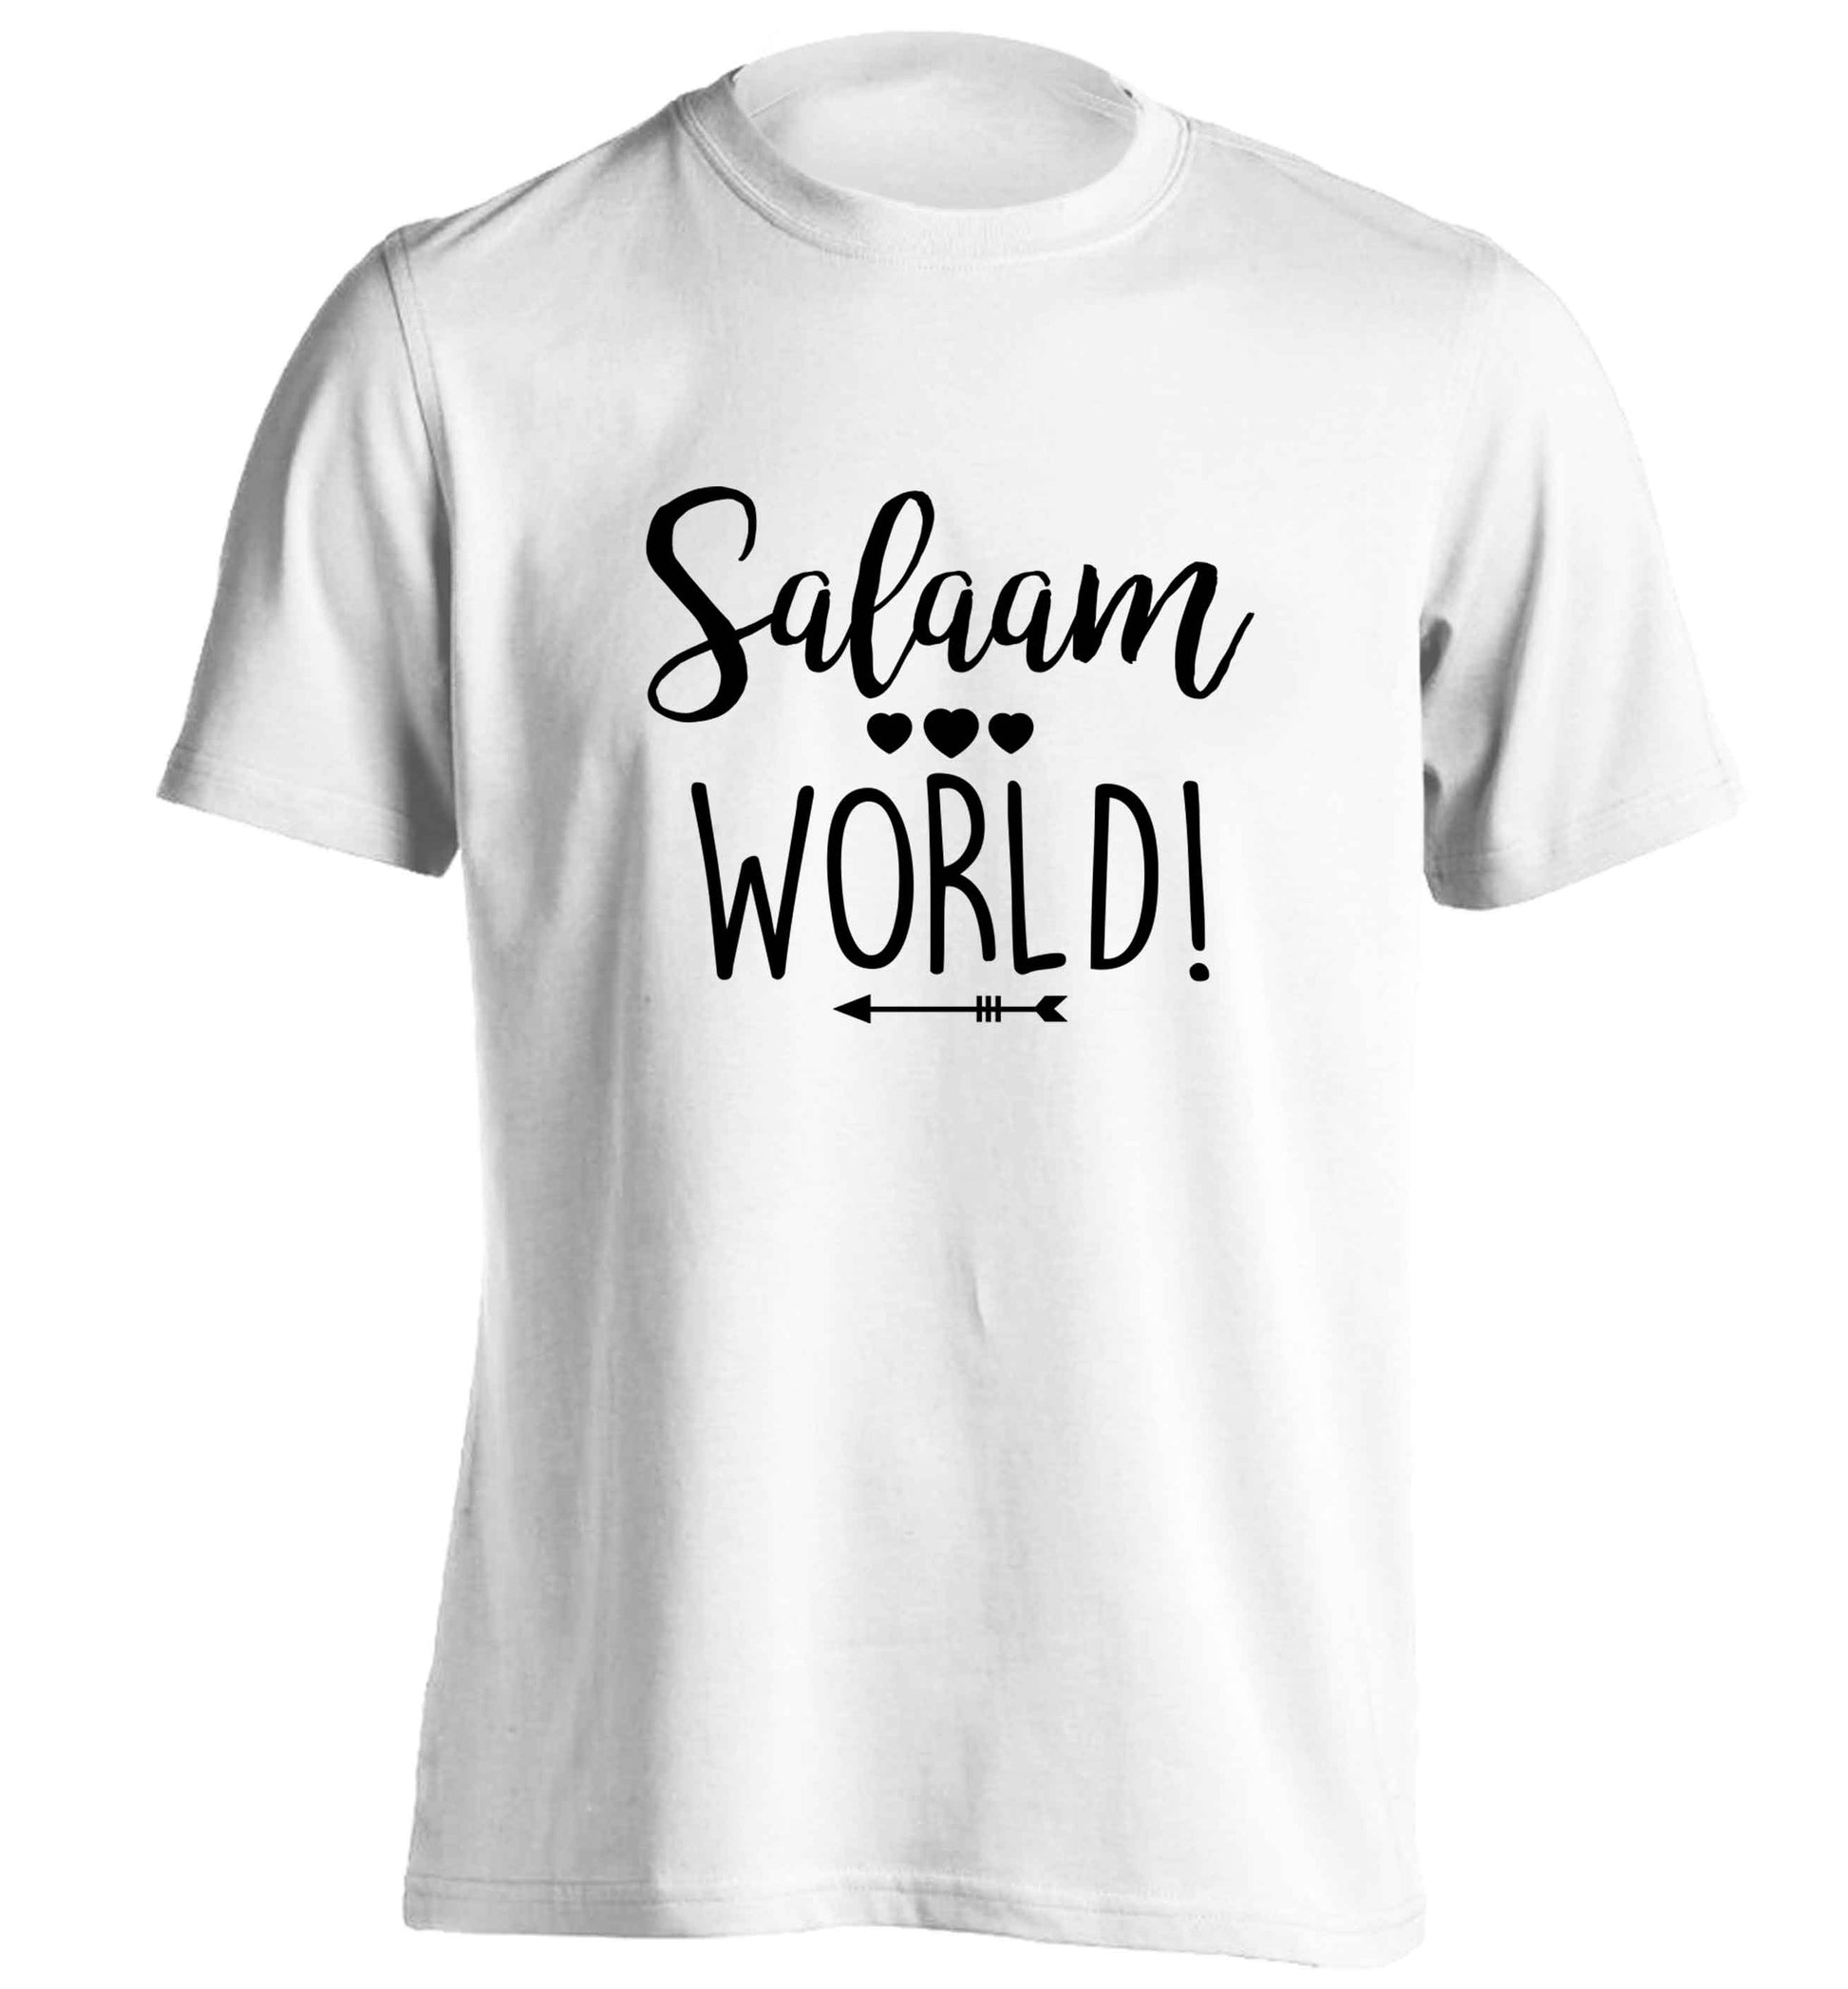 Salaam world adults unisex white Tshirt 2XL